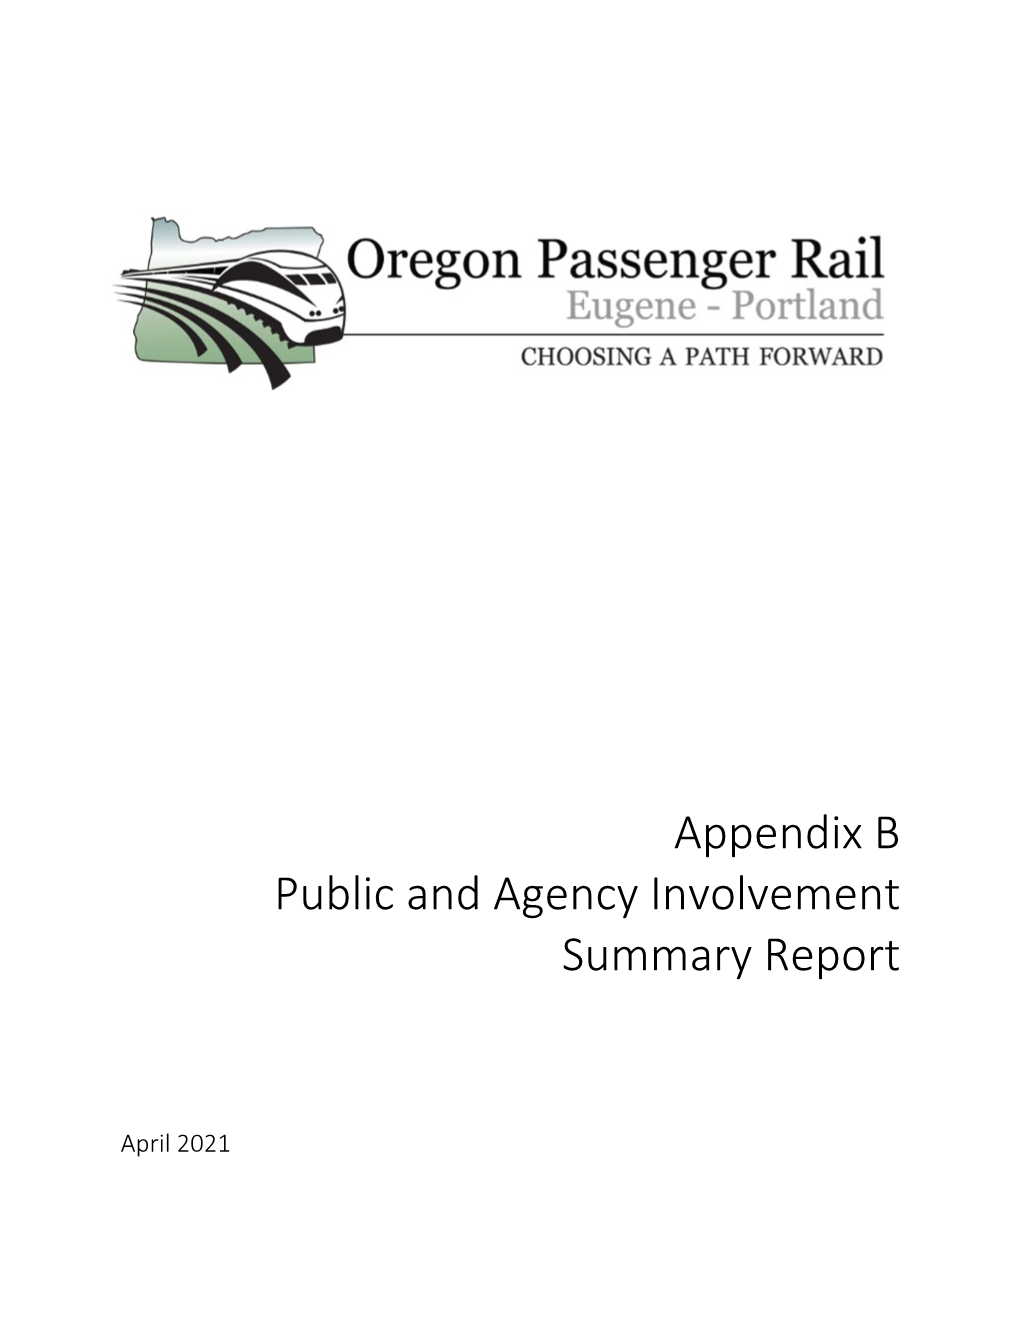 Oregon Passenger Rail Final Environmental Impact Statement